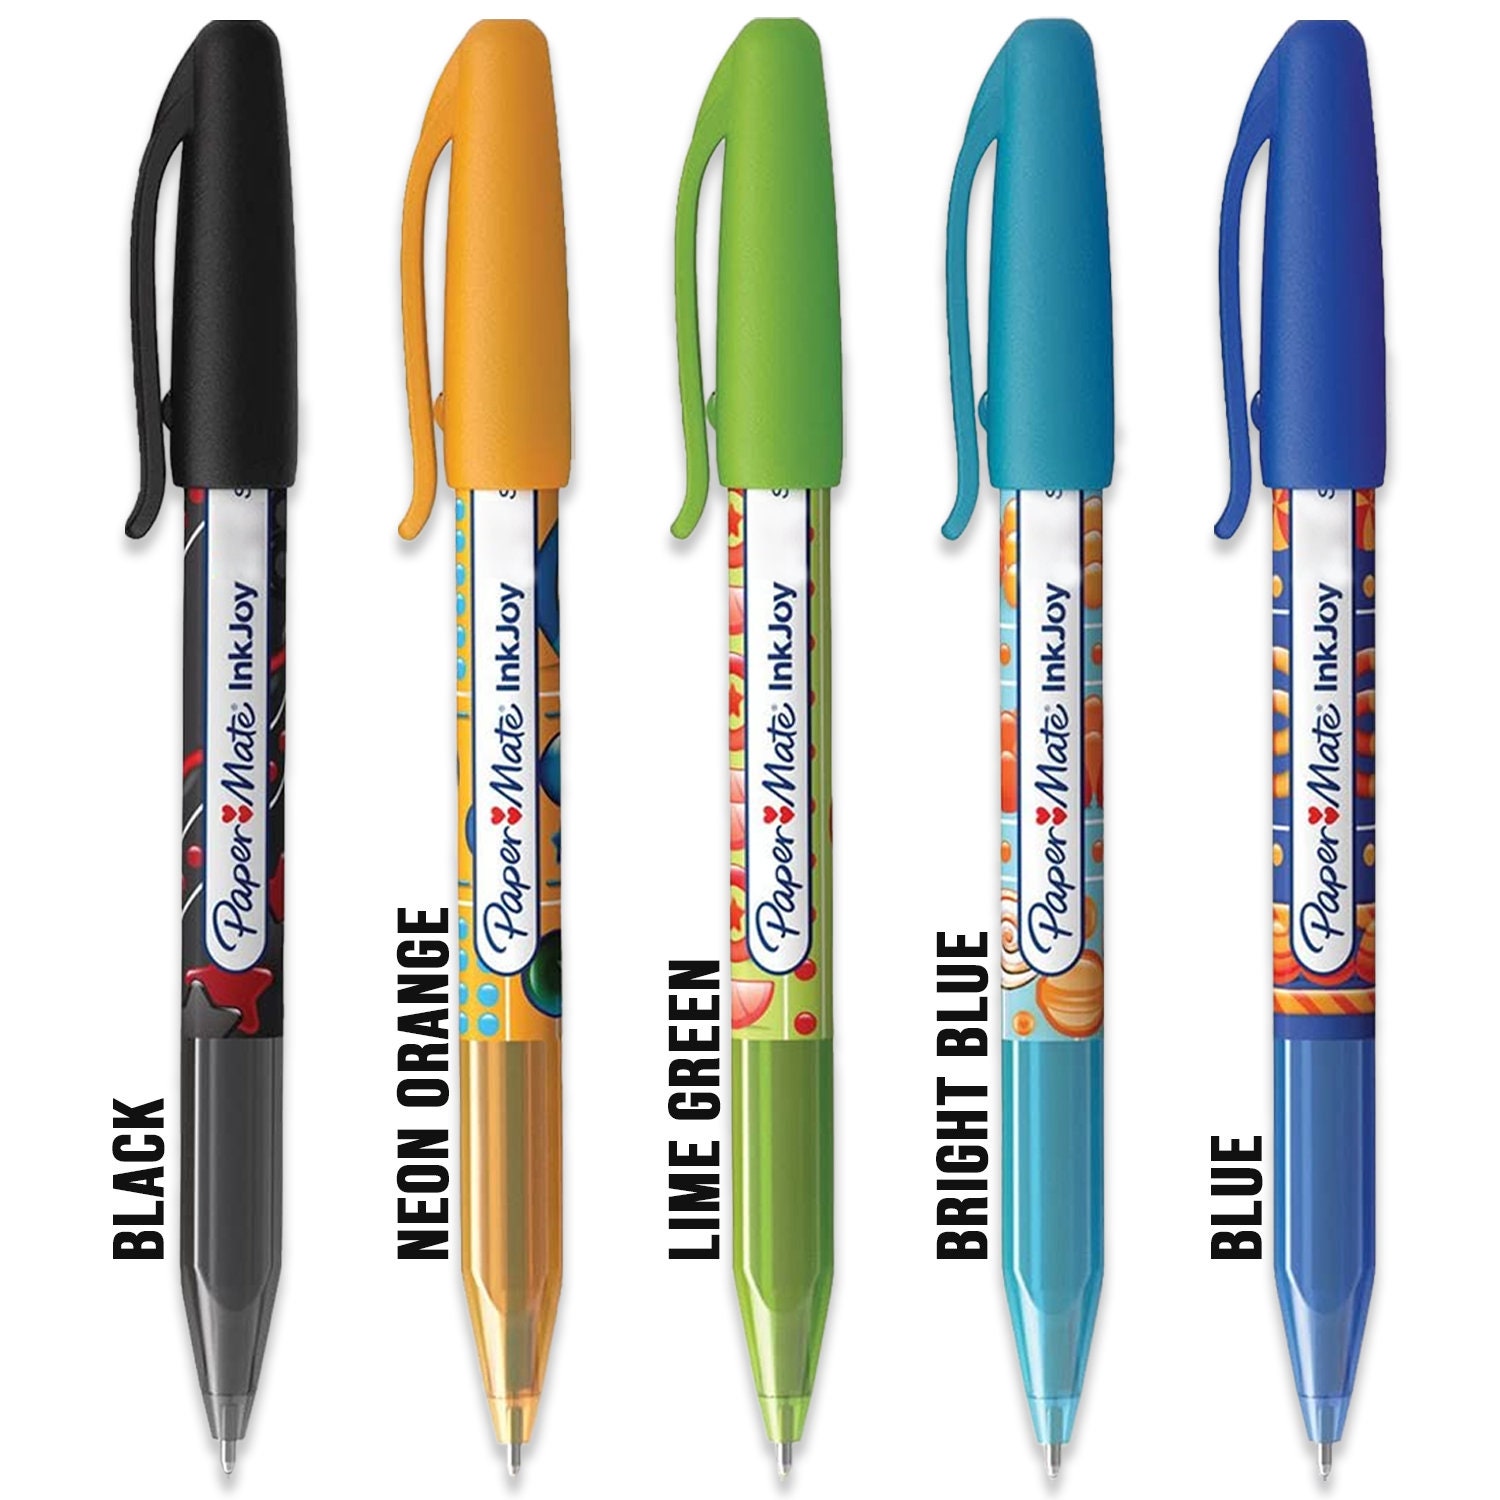 Mini Gel Pens Set 14-Count